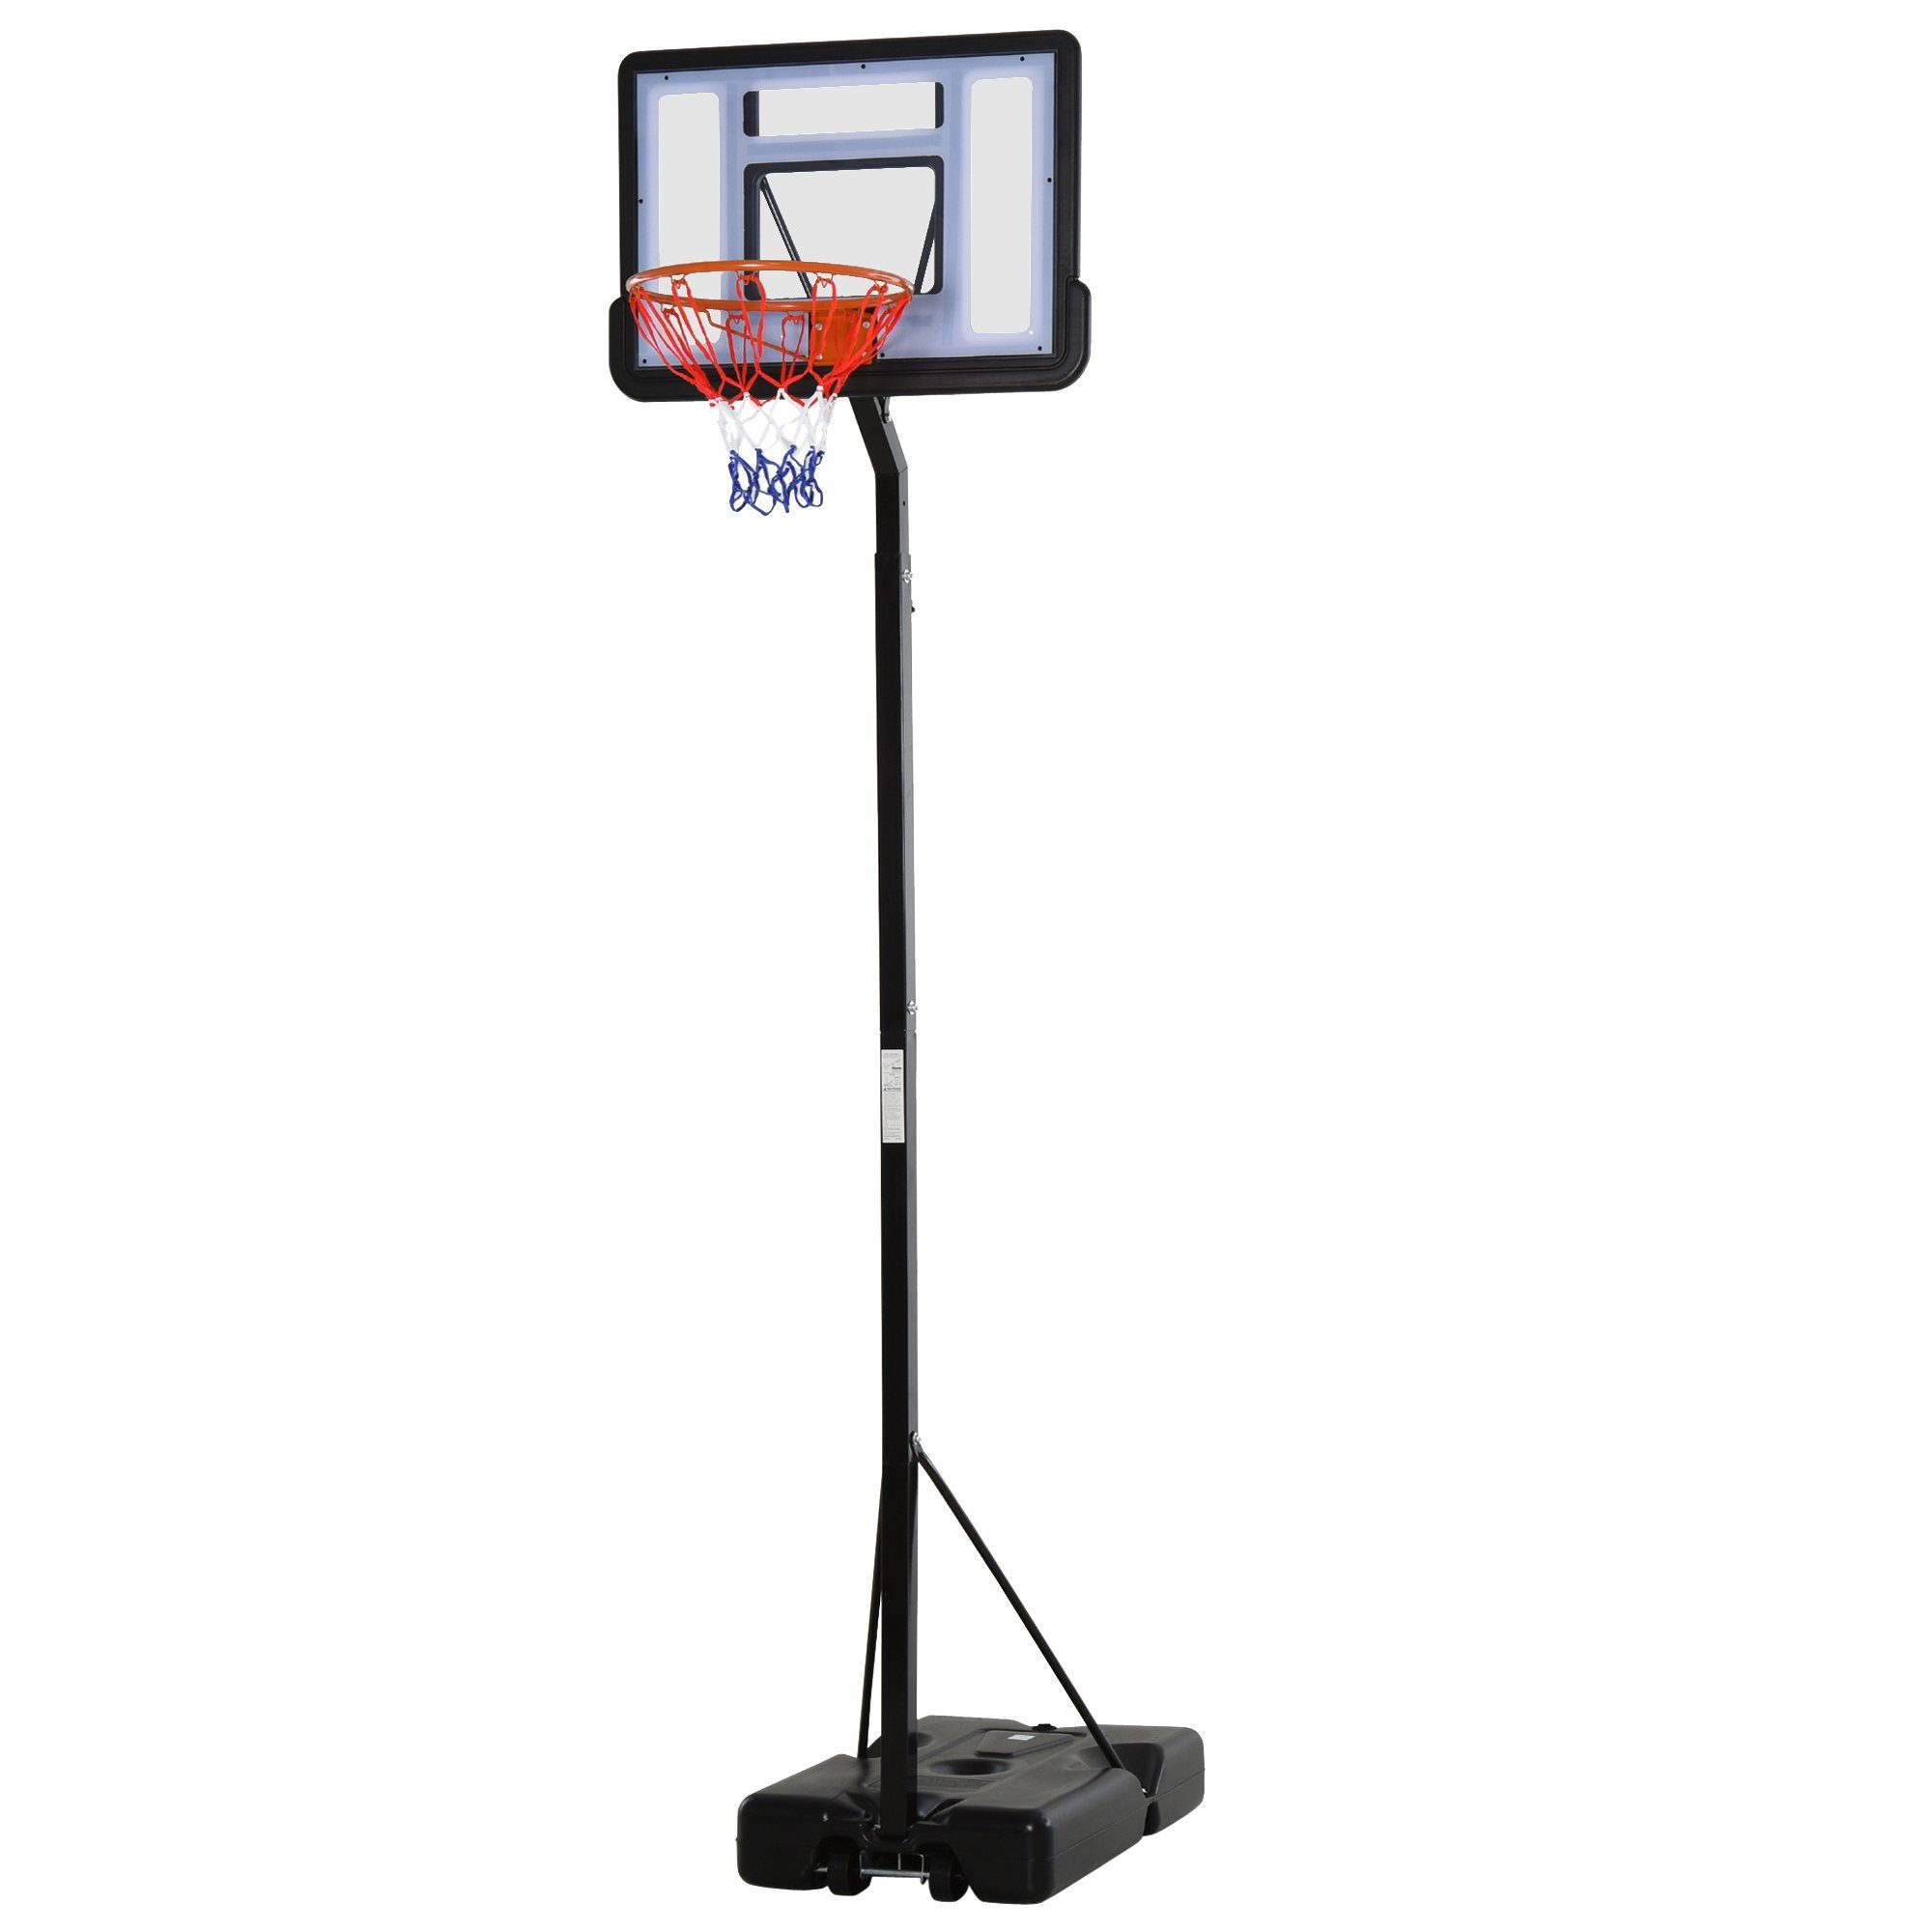 HOMCOM Basketballständer Basketballkorb Rädern 2 mit